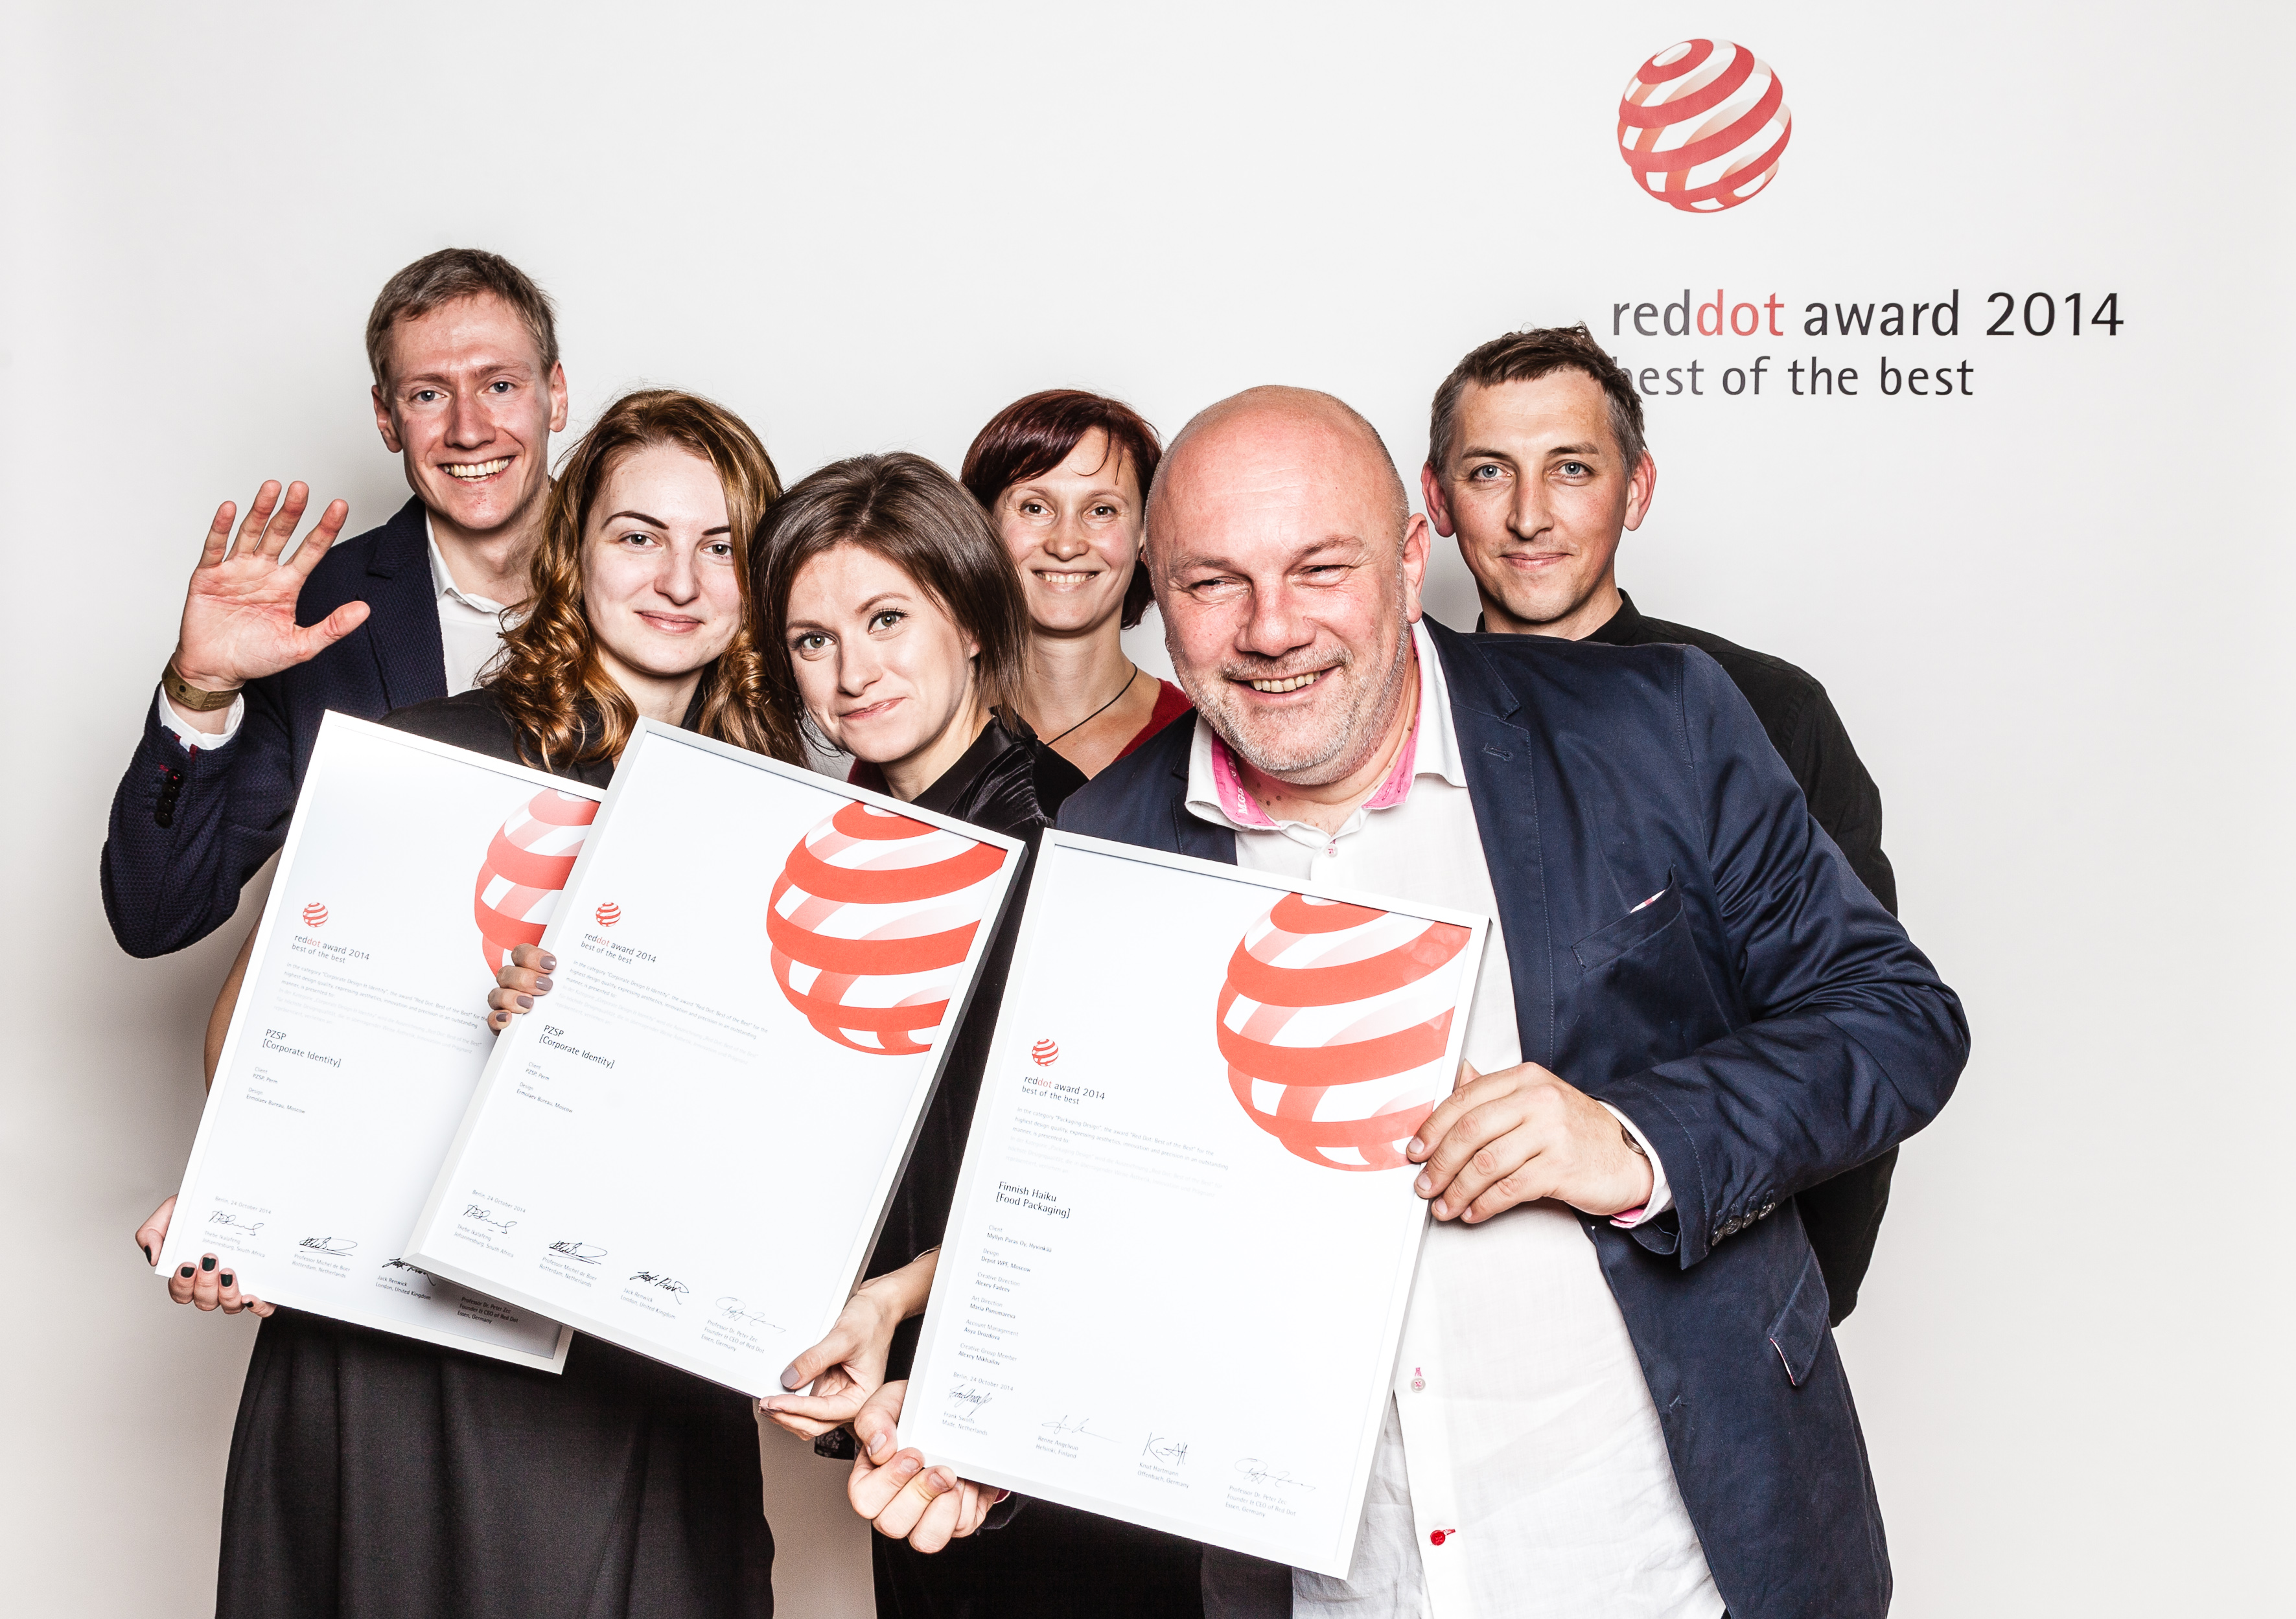 red dot communication design, award ceremony 2014, брендинговое агентство Depot WPF, Алексей Фадеев, дизайн упаковки